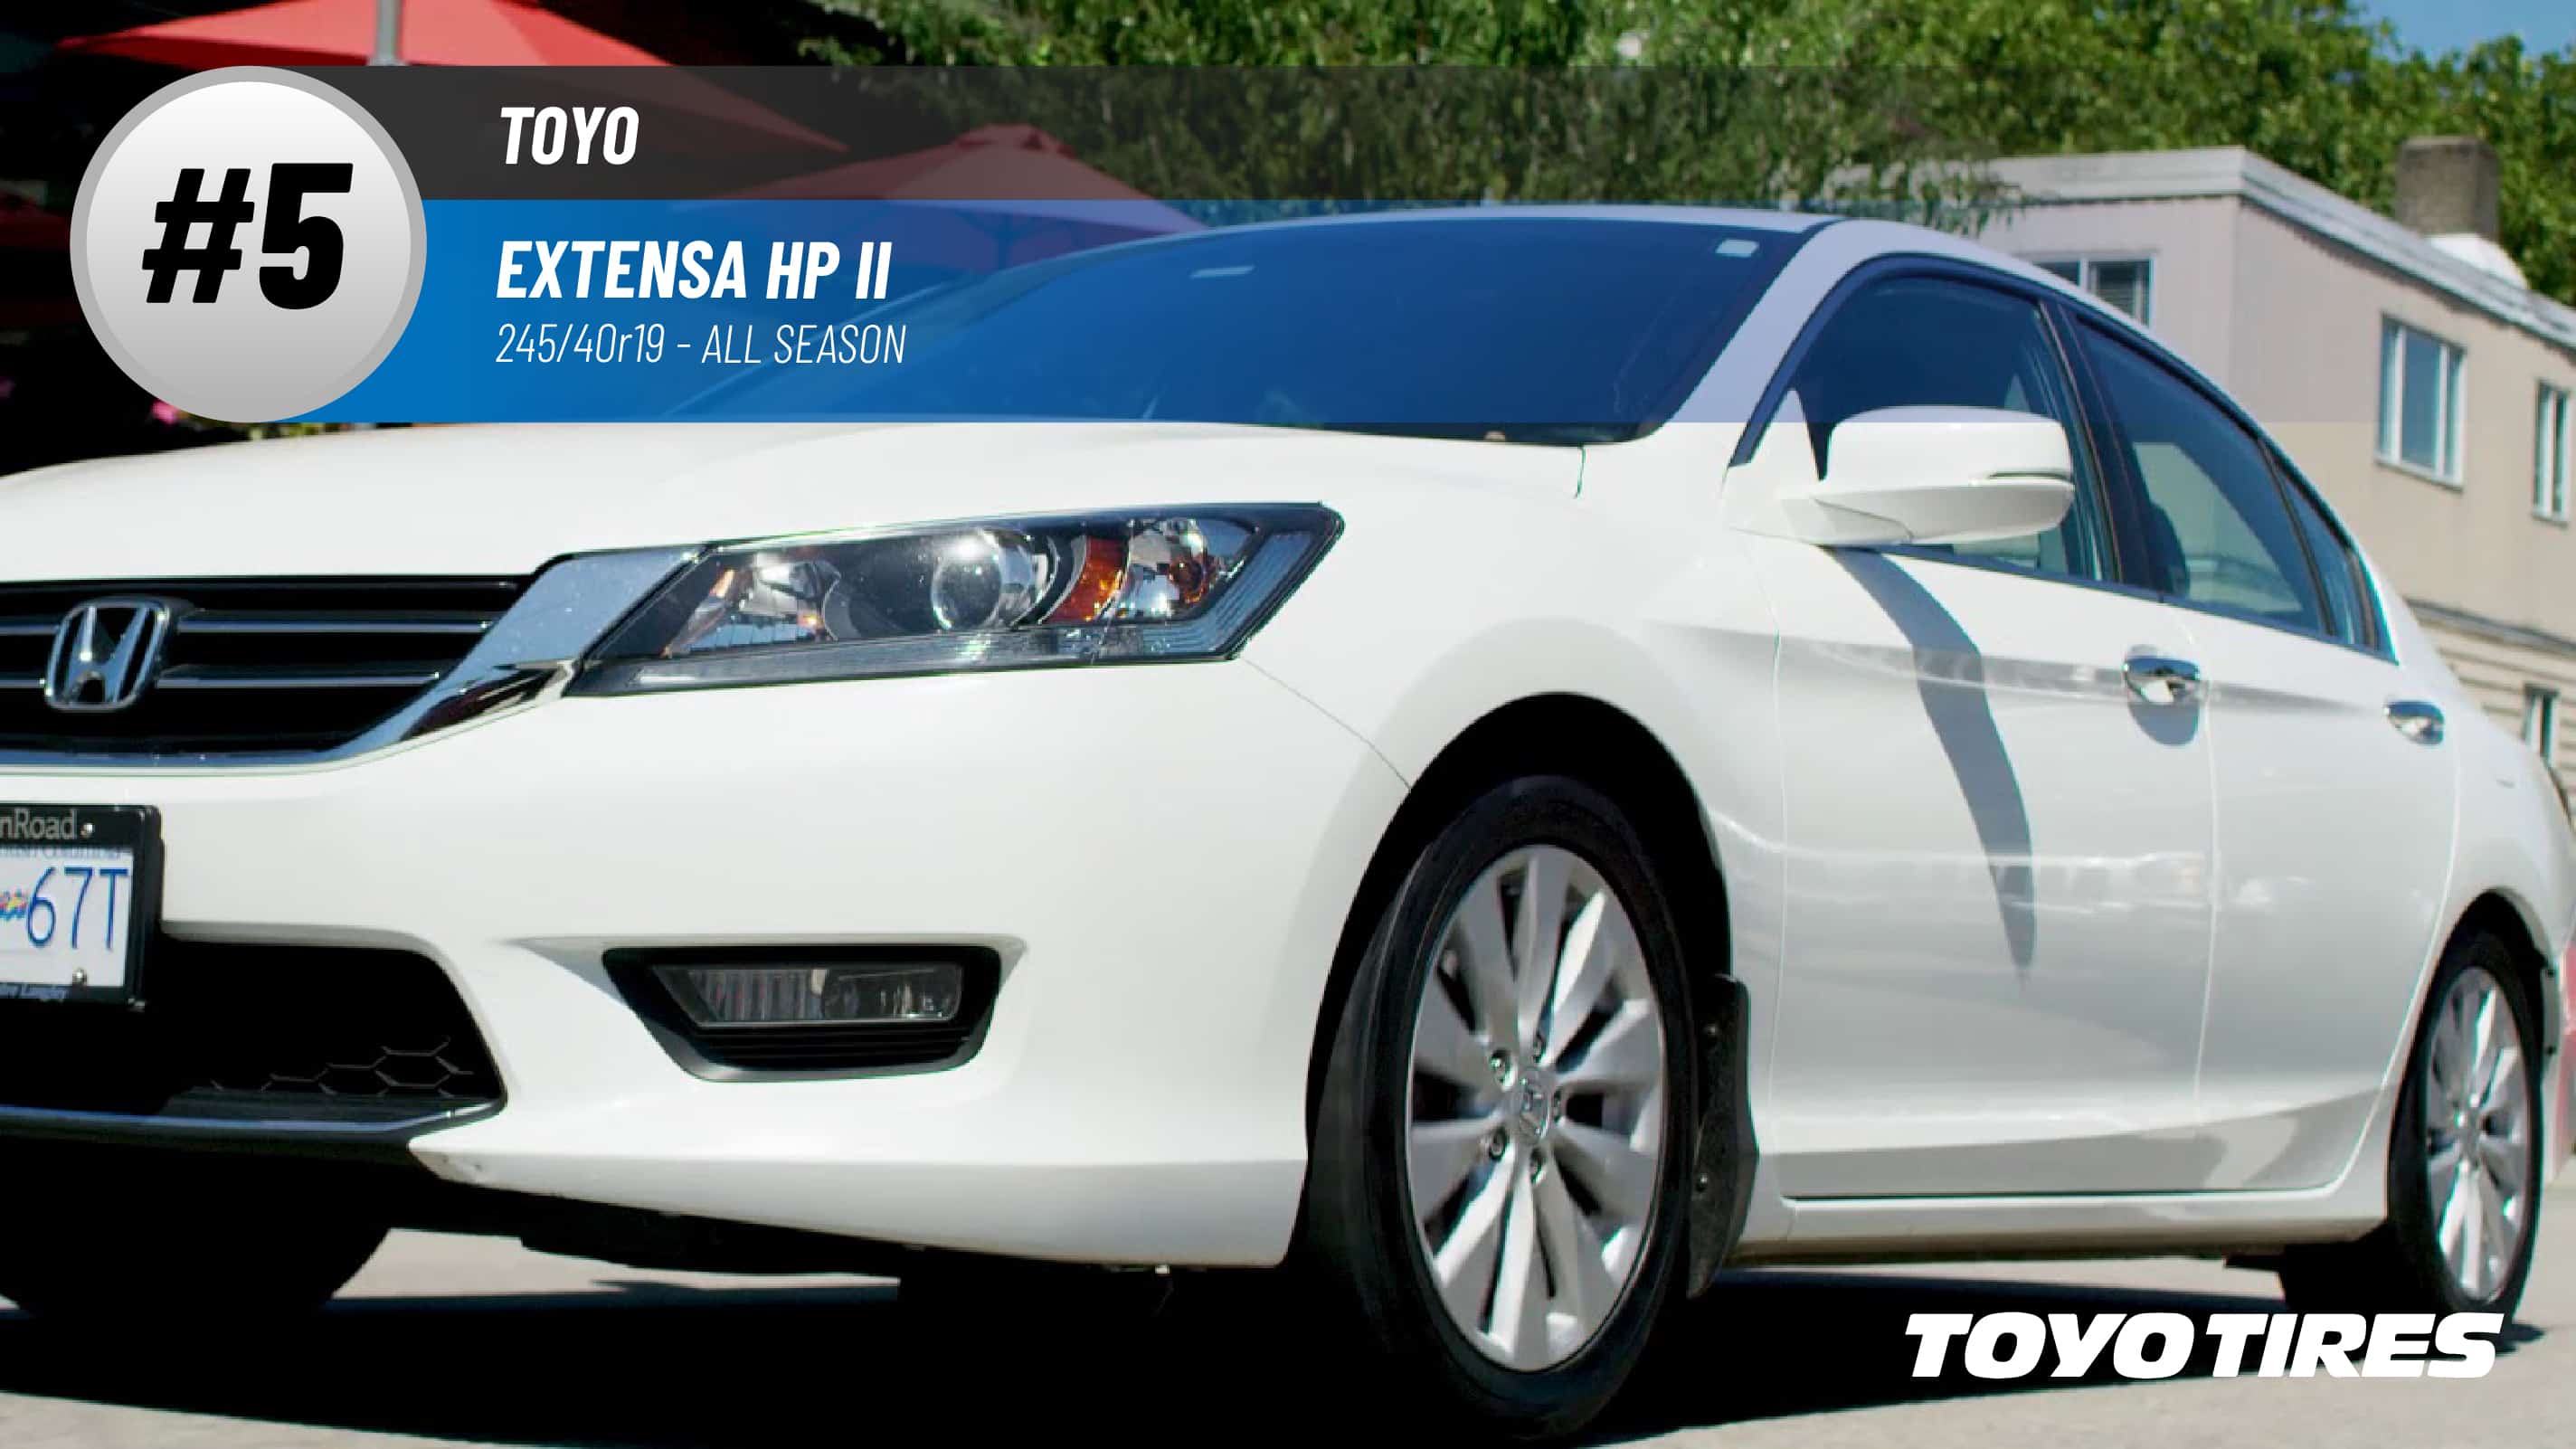 Top #5 All Season Tires: Toyo Extensa HP II – 245/40R19